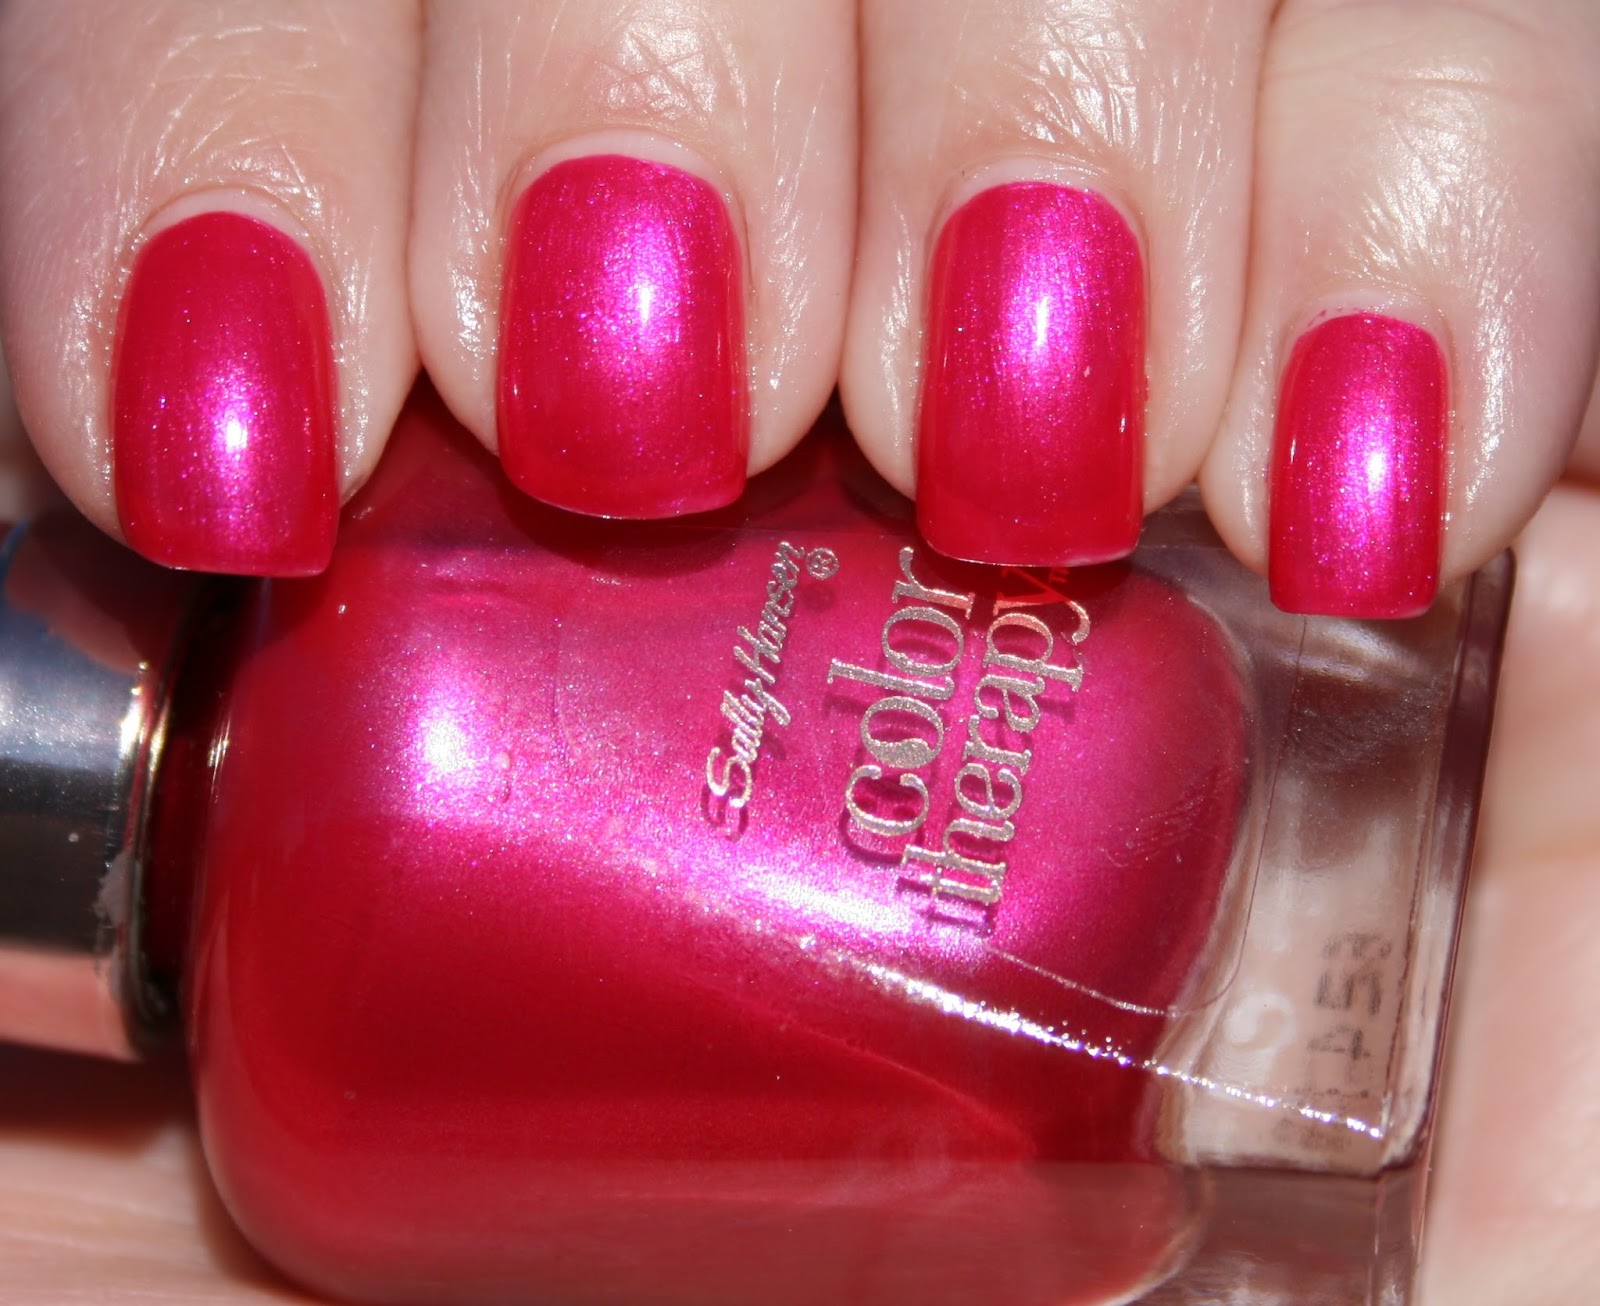 4. Sally Hansen Color Therapy Nail Polish - Rosy Quartz - wide 8